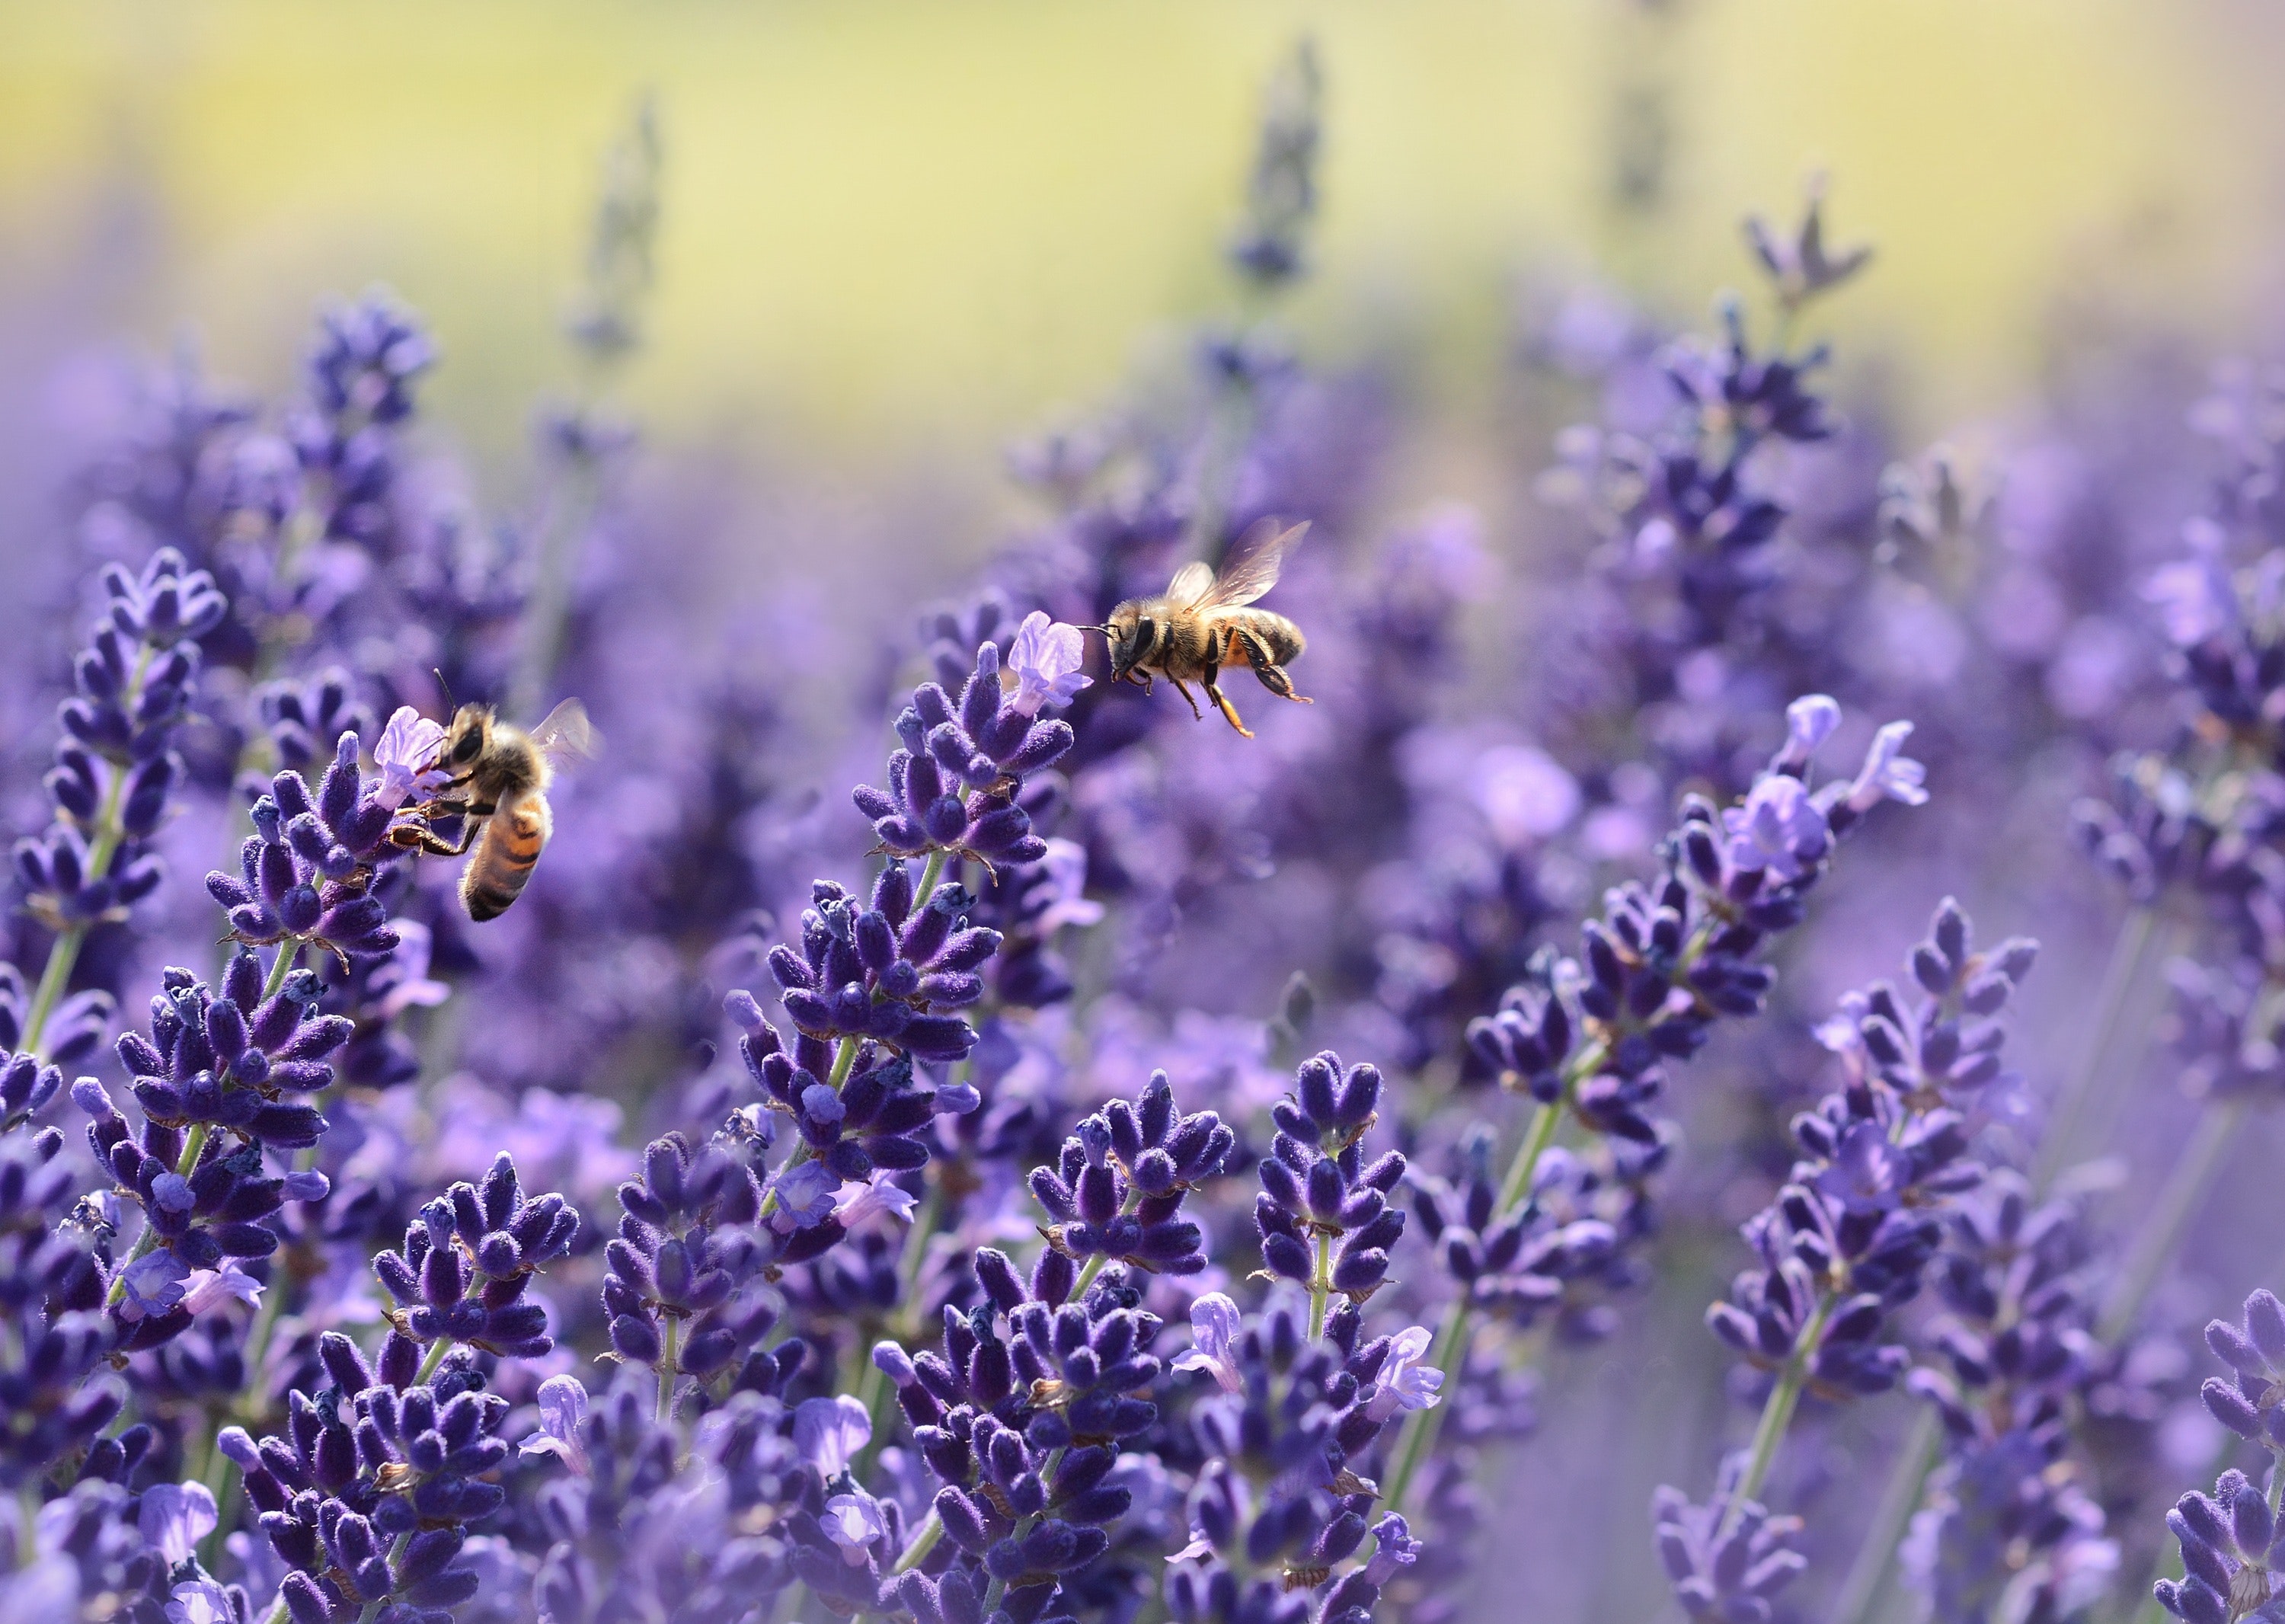 Bees on purple flower photo